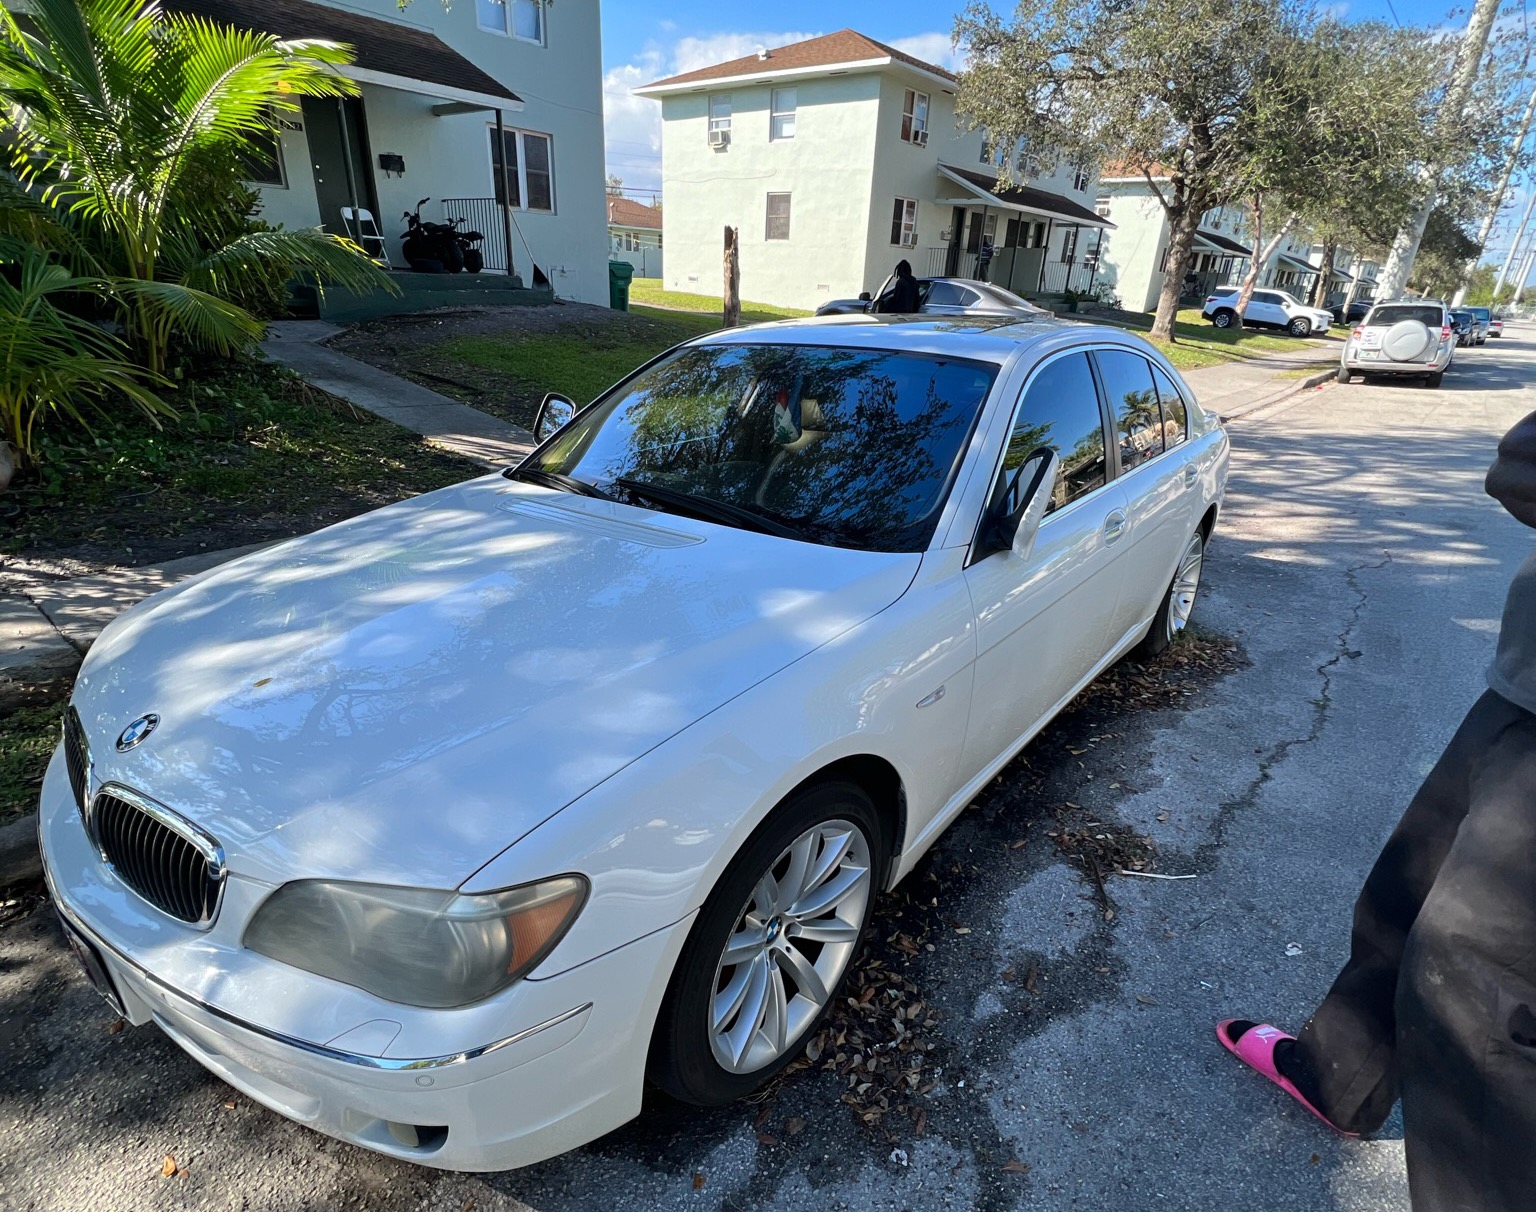 Cash for junk cars service in Deerfield Beach, FL